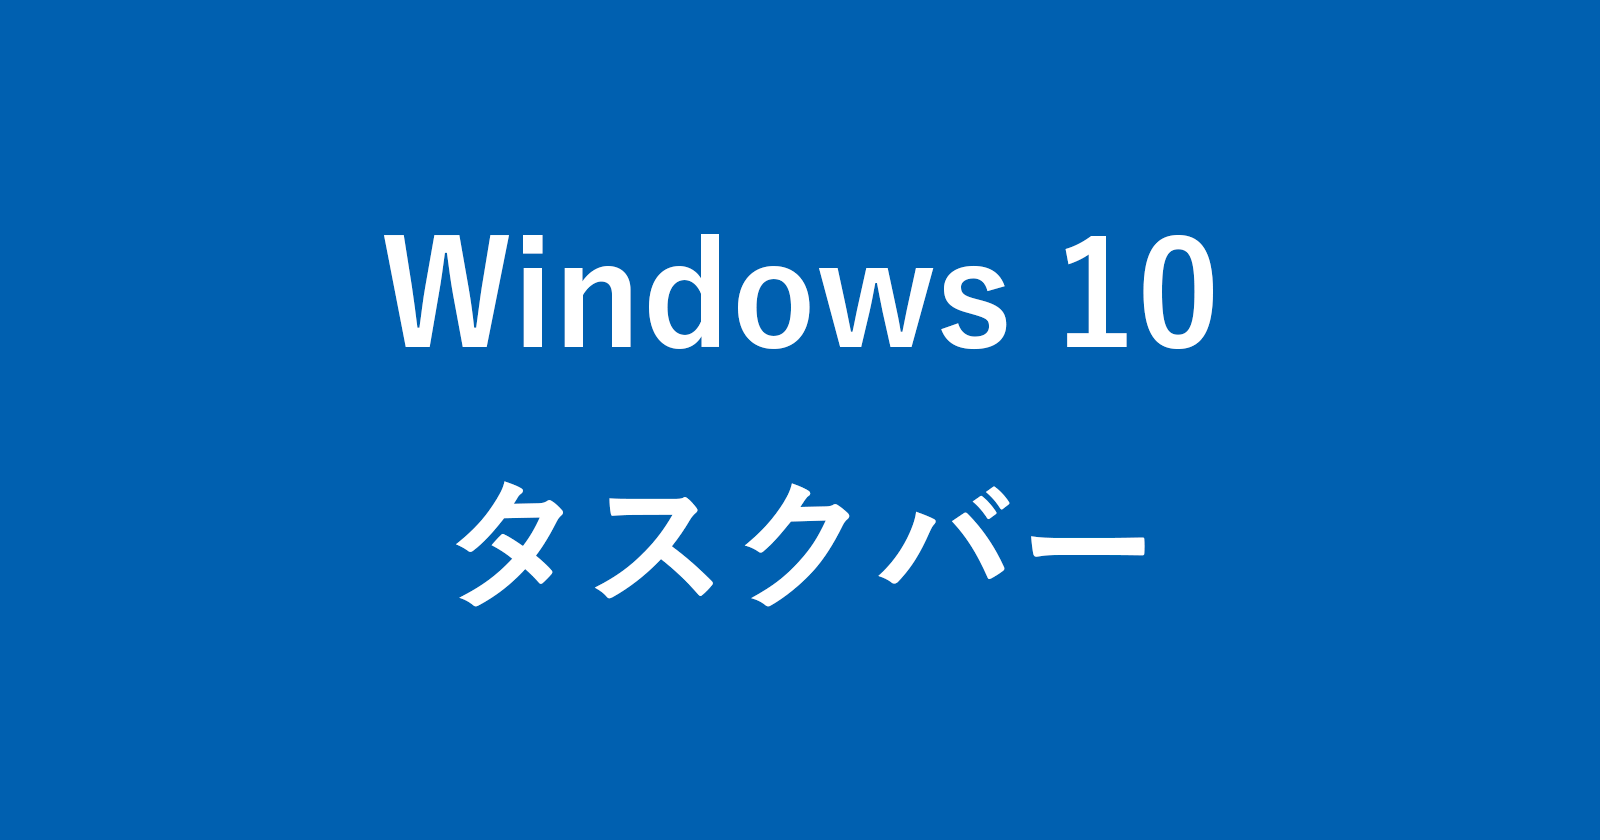 windows 10 taskbar